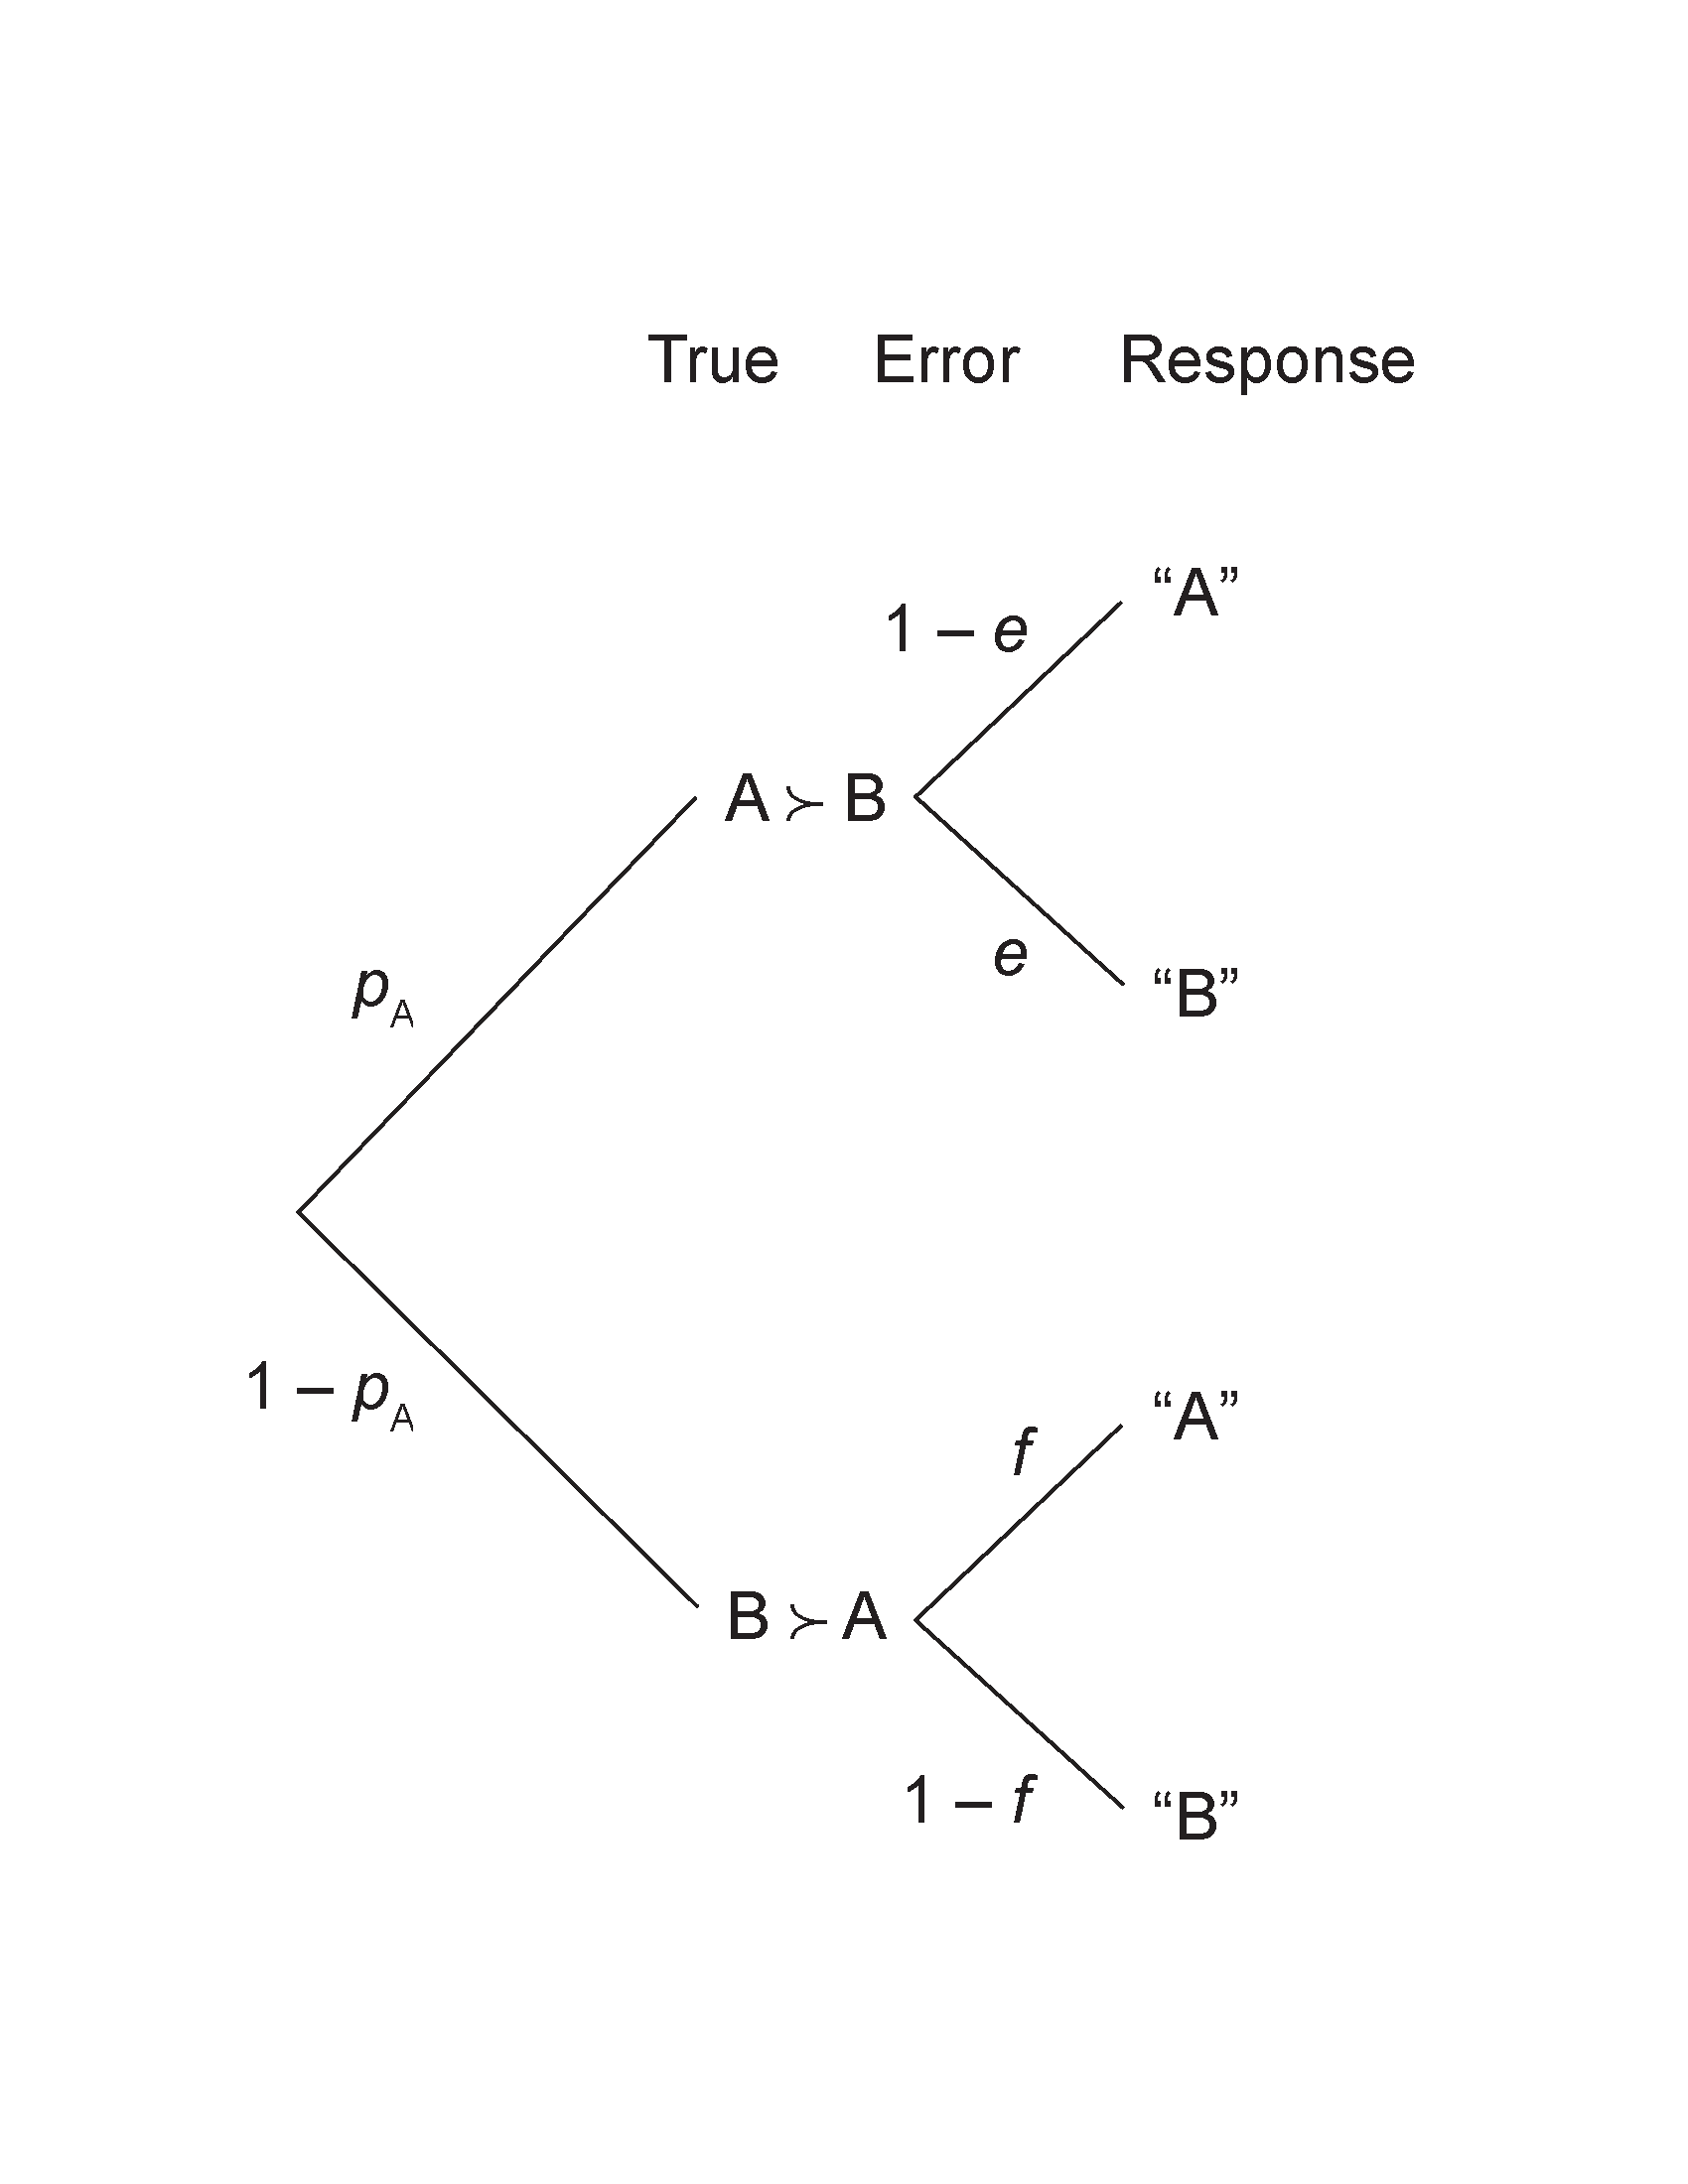 Figure of True and Error Model